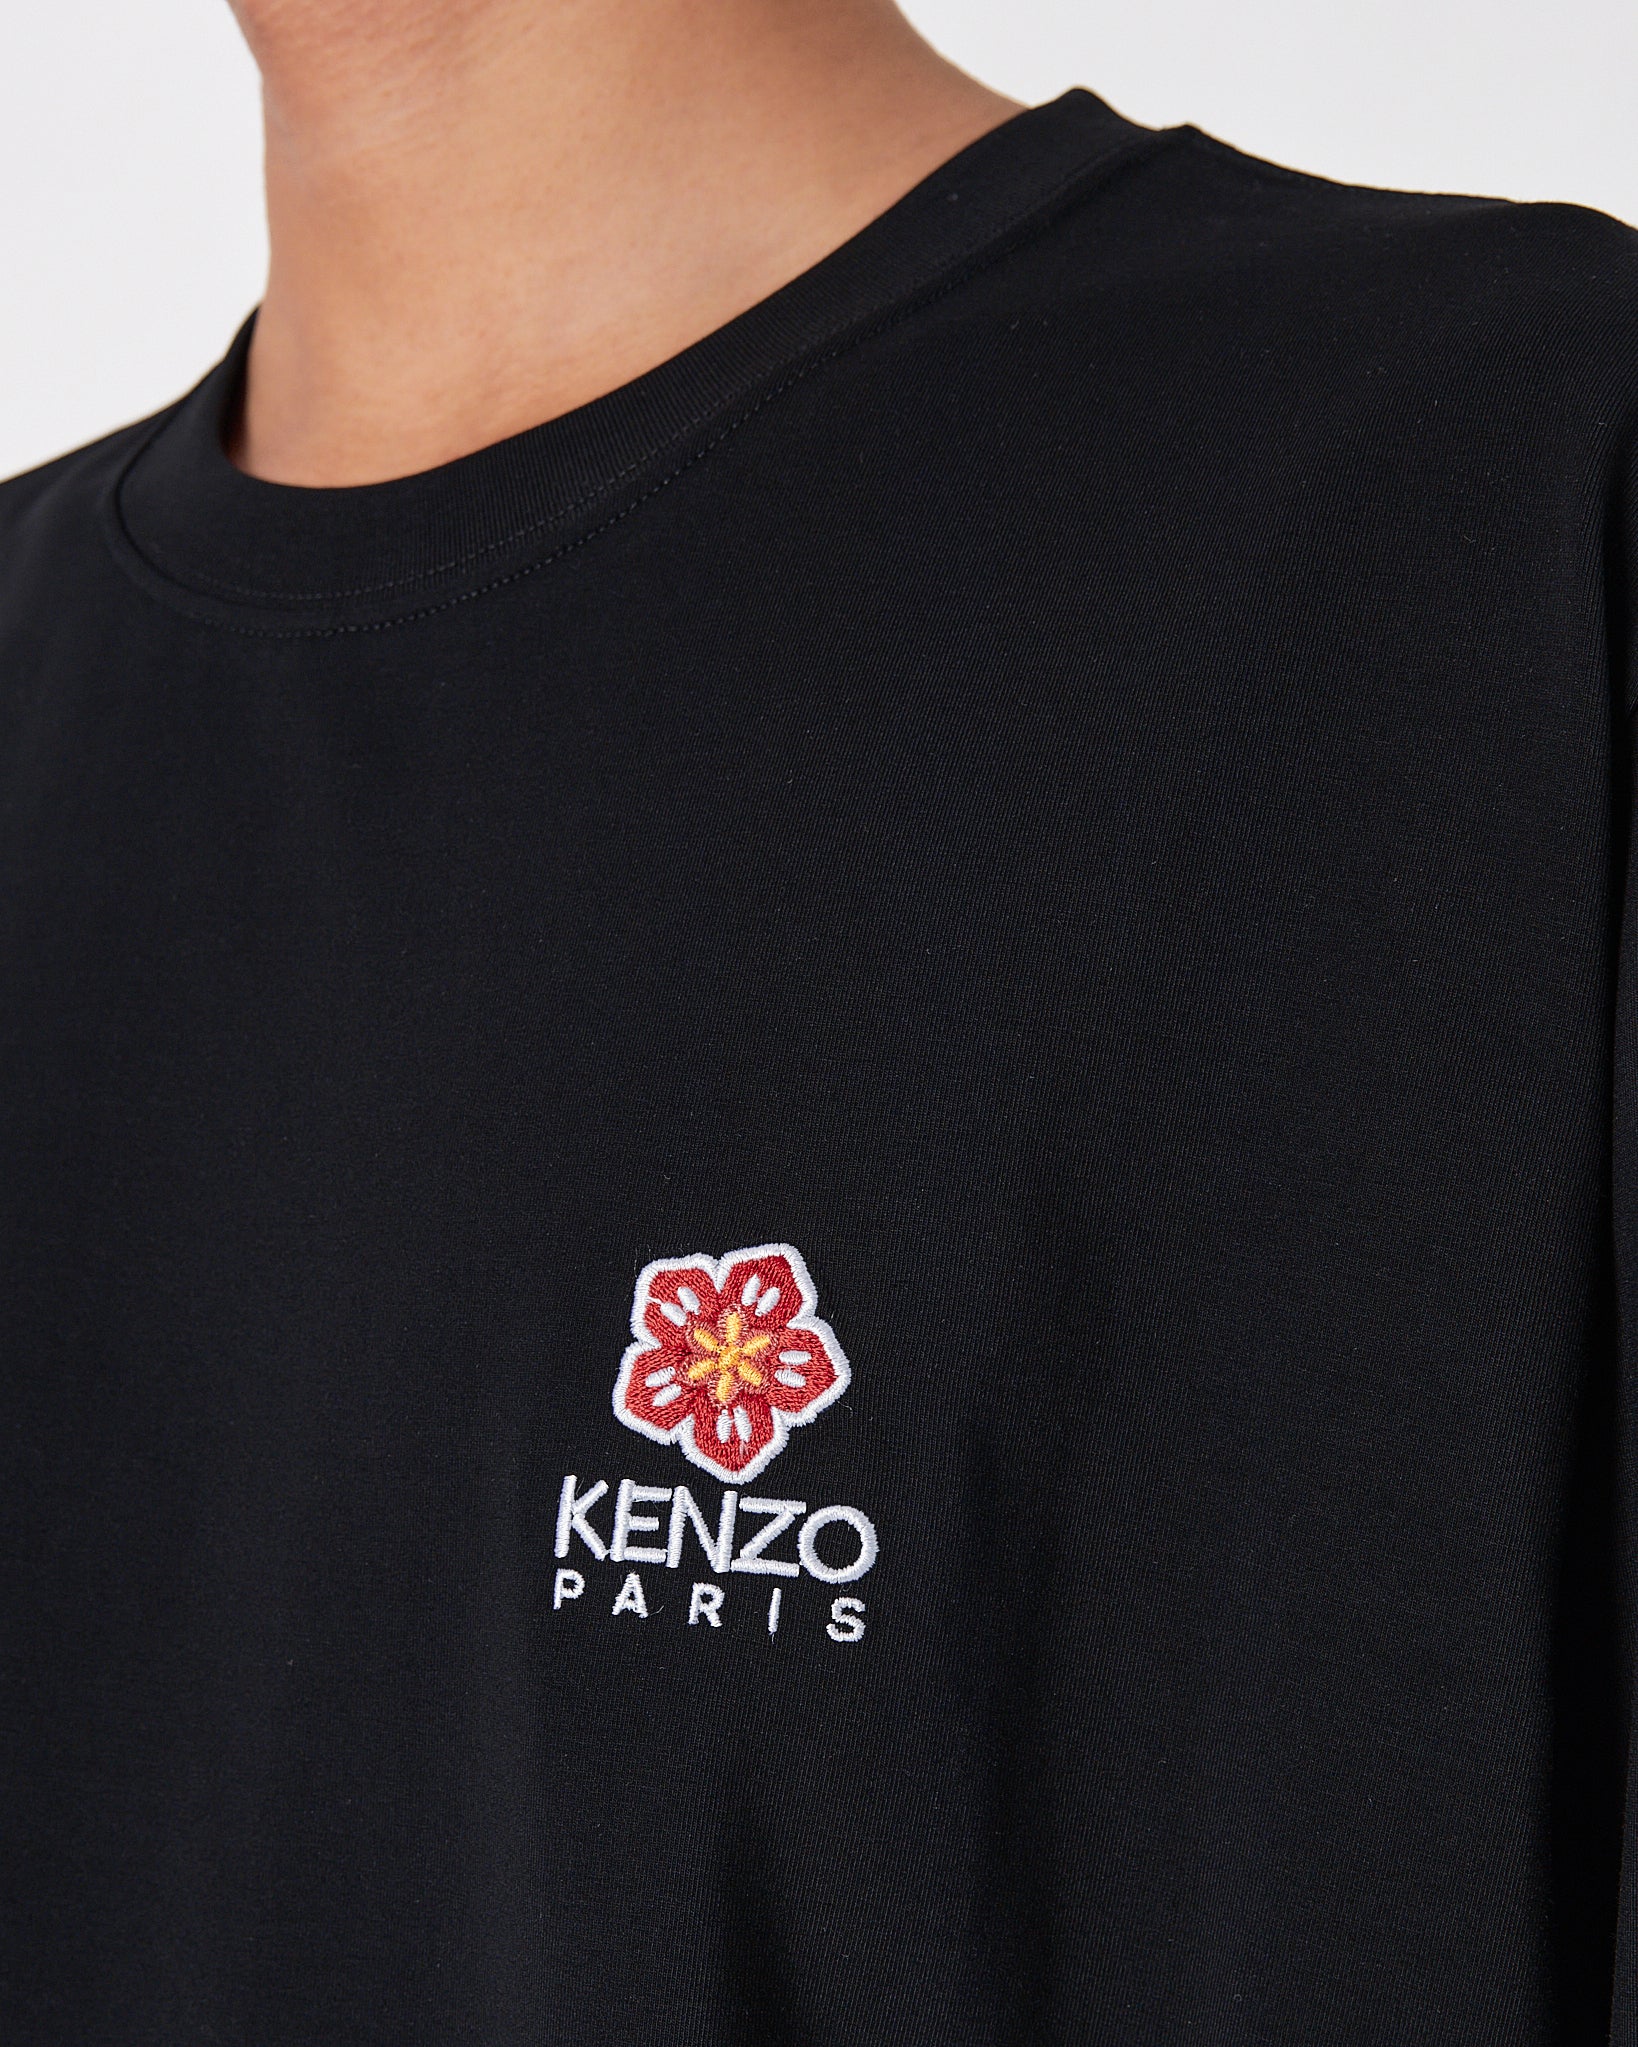 KEN Back Logo Printed Men Blue T-Shirt Long Sleeve 23.90